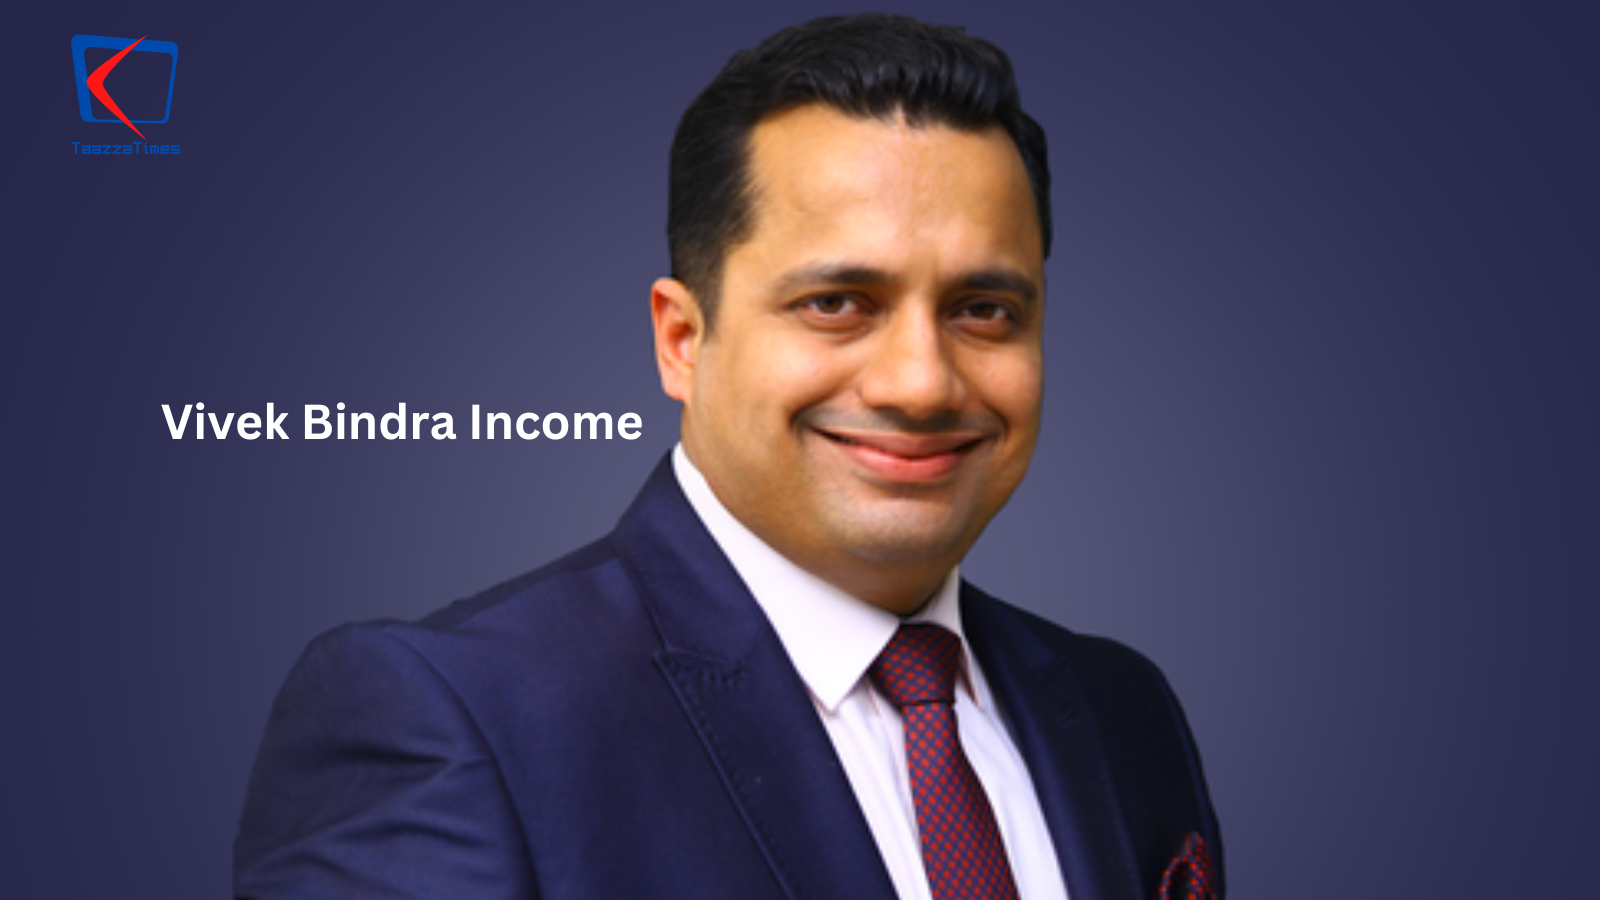 Vivek Bindra Income